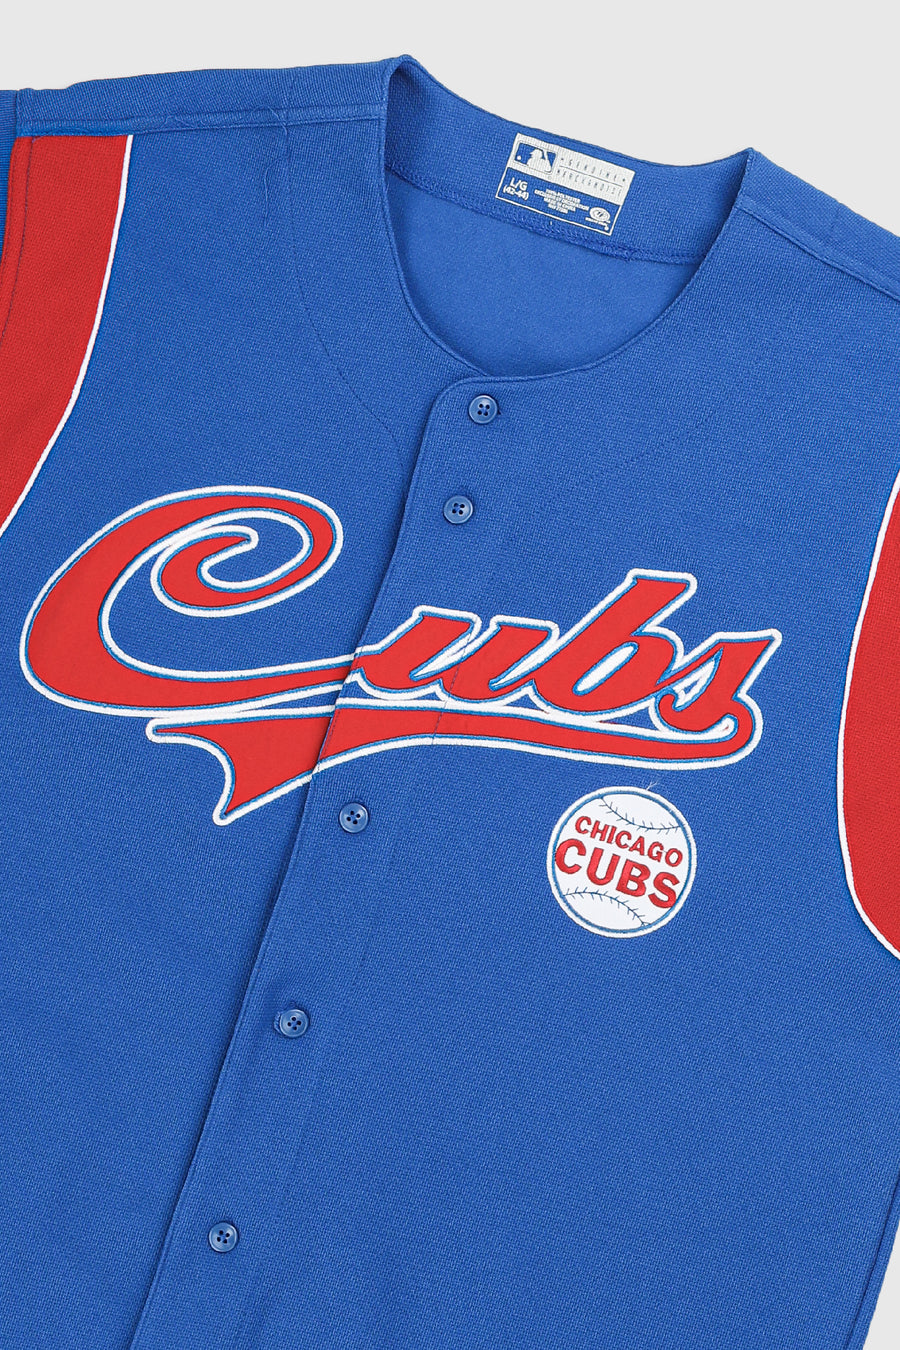 Vintage Cubs MLB Baseball Jersey